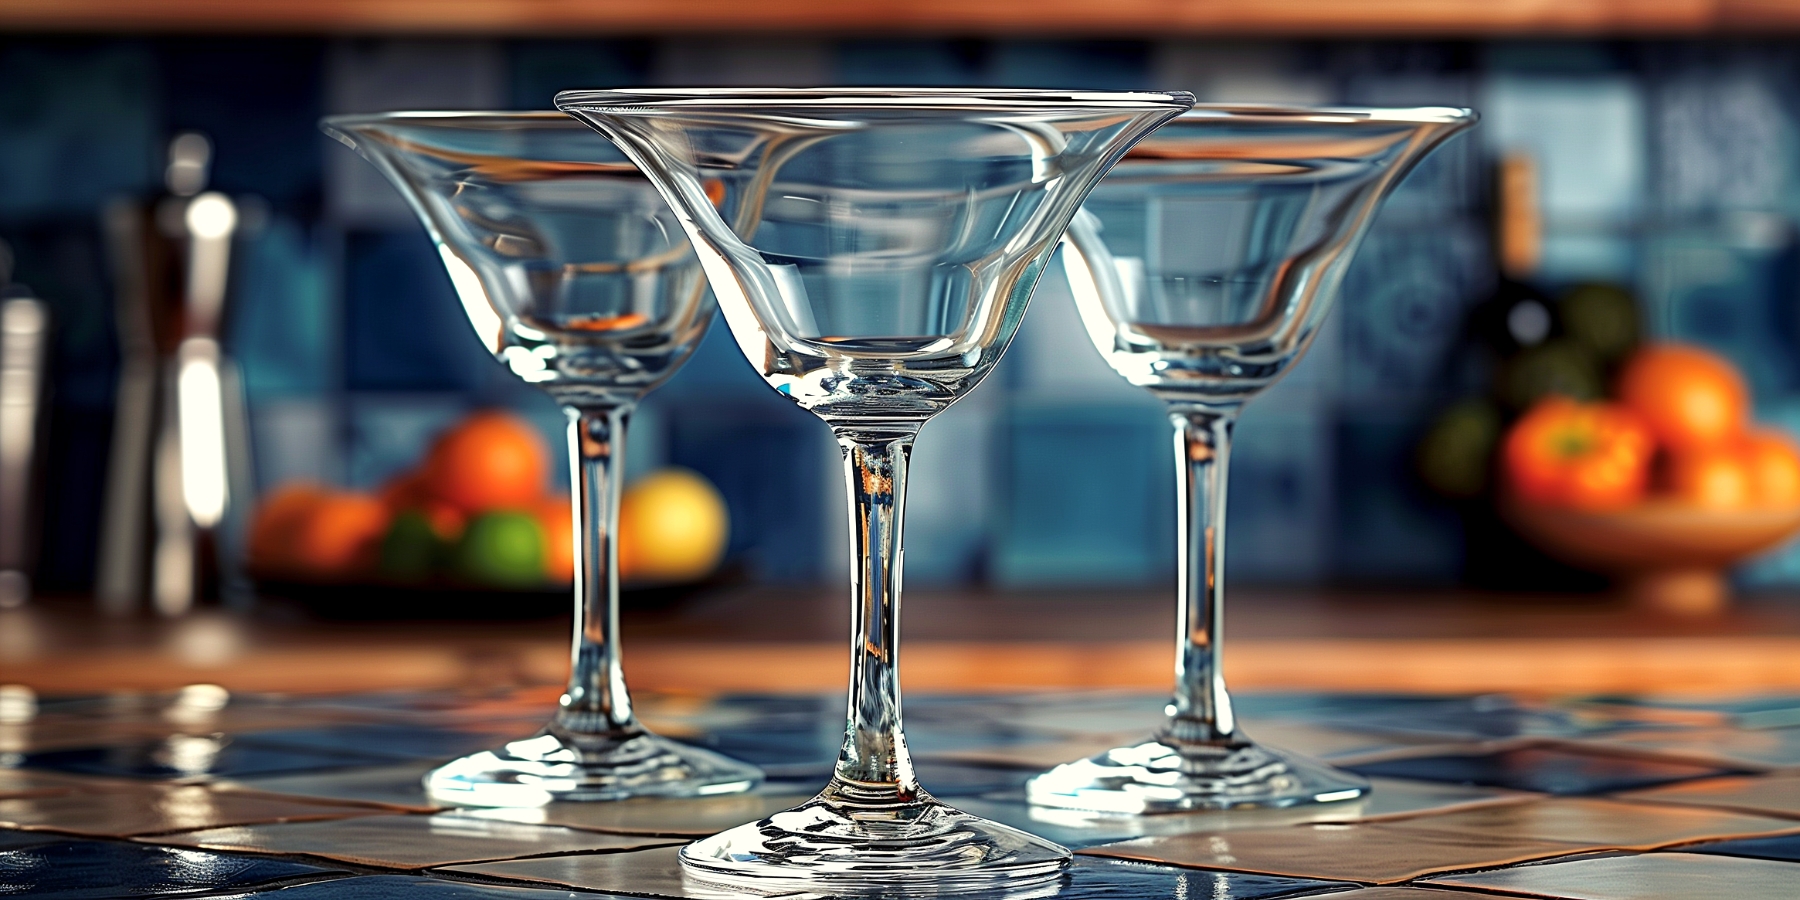 Three empty margarita glasses in a modern kitchen setting